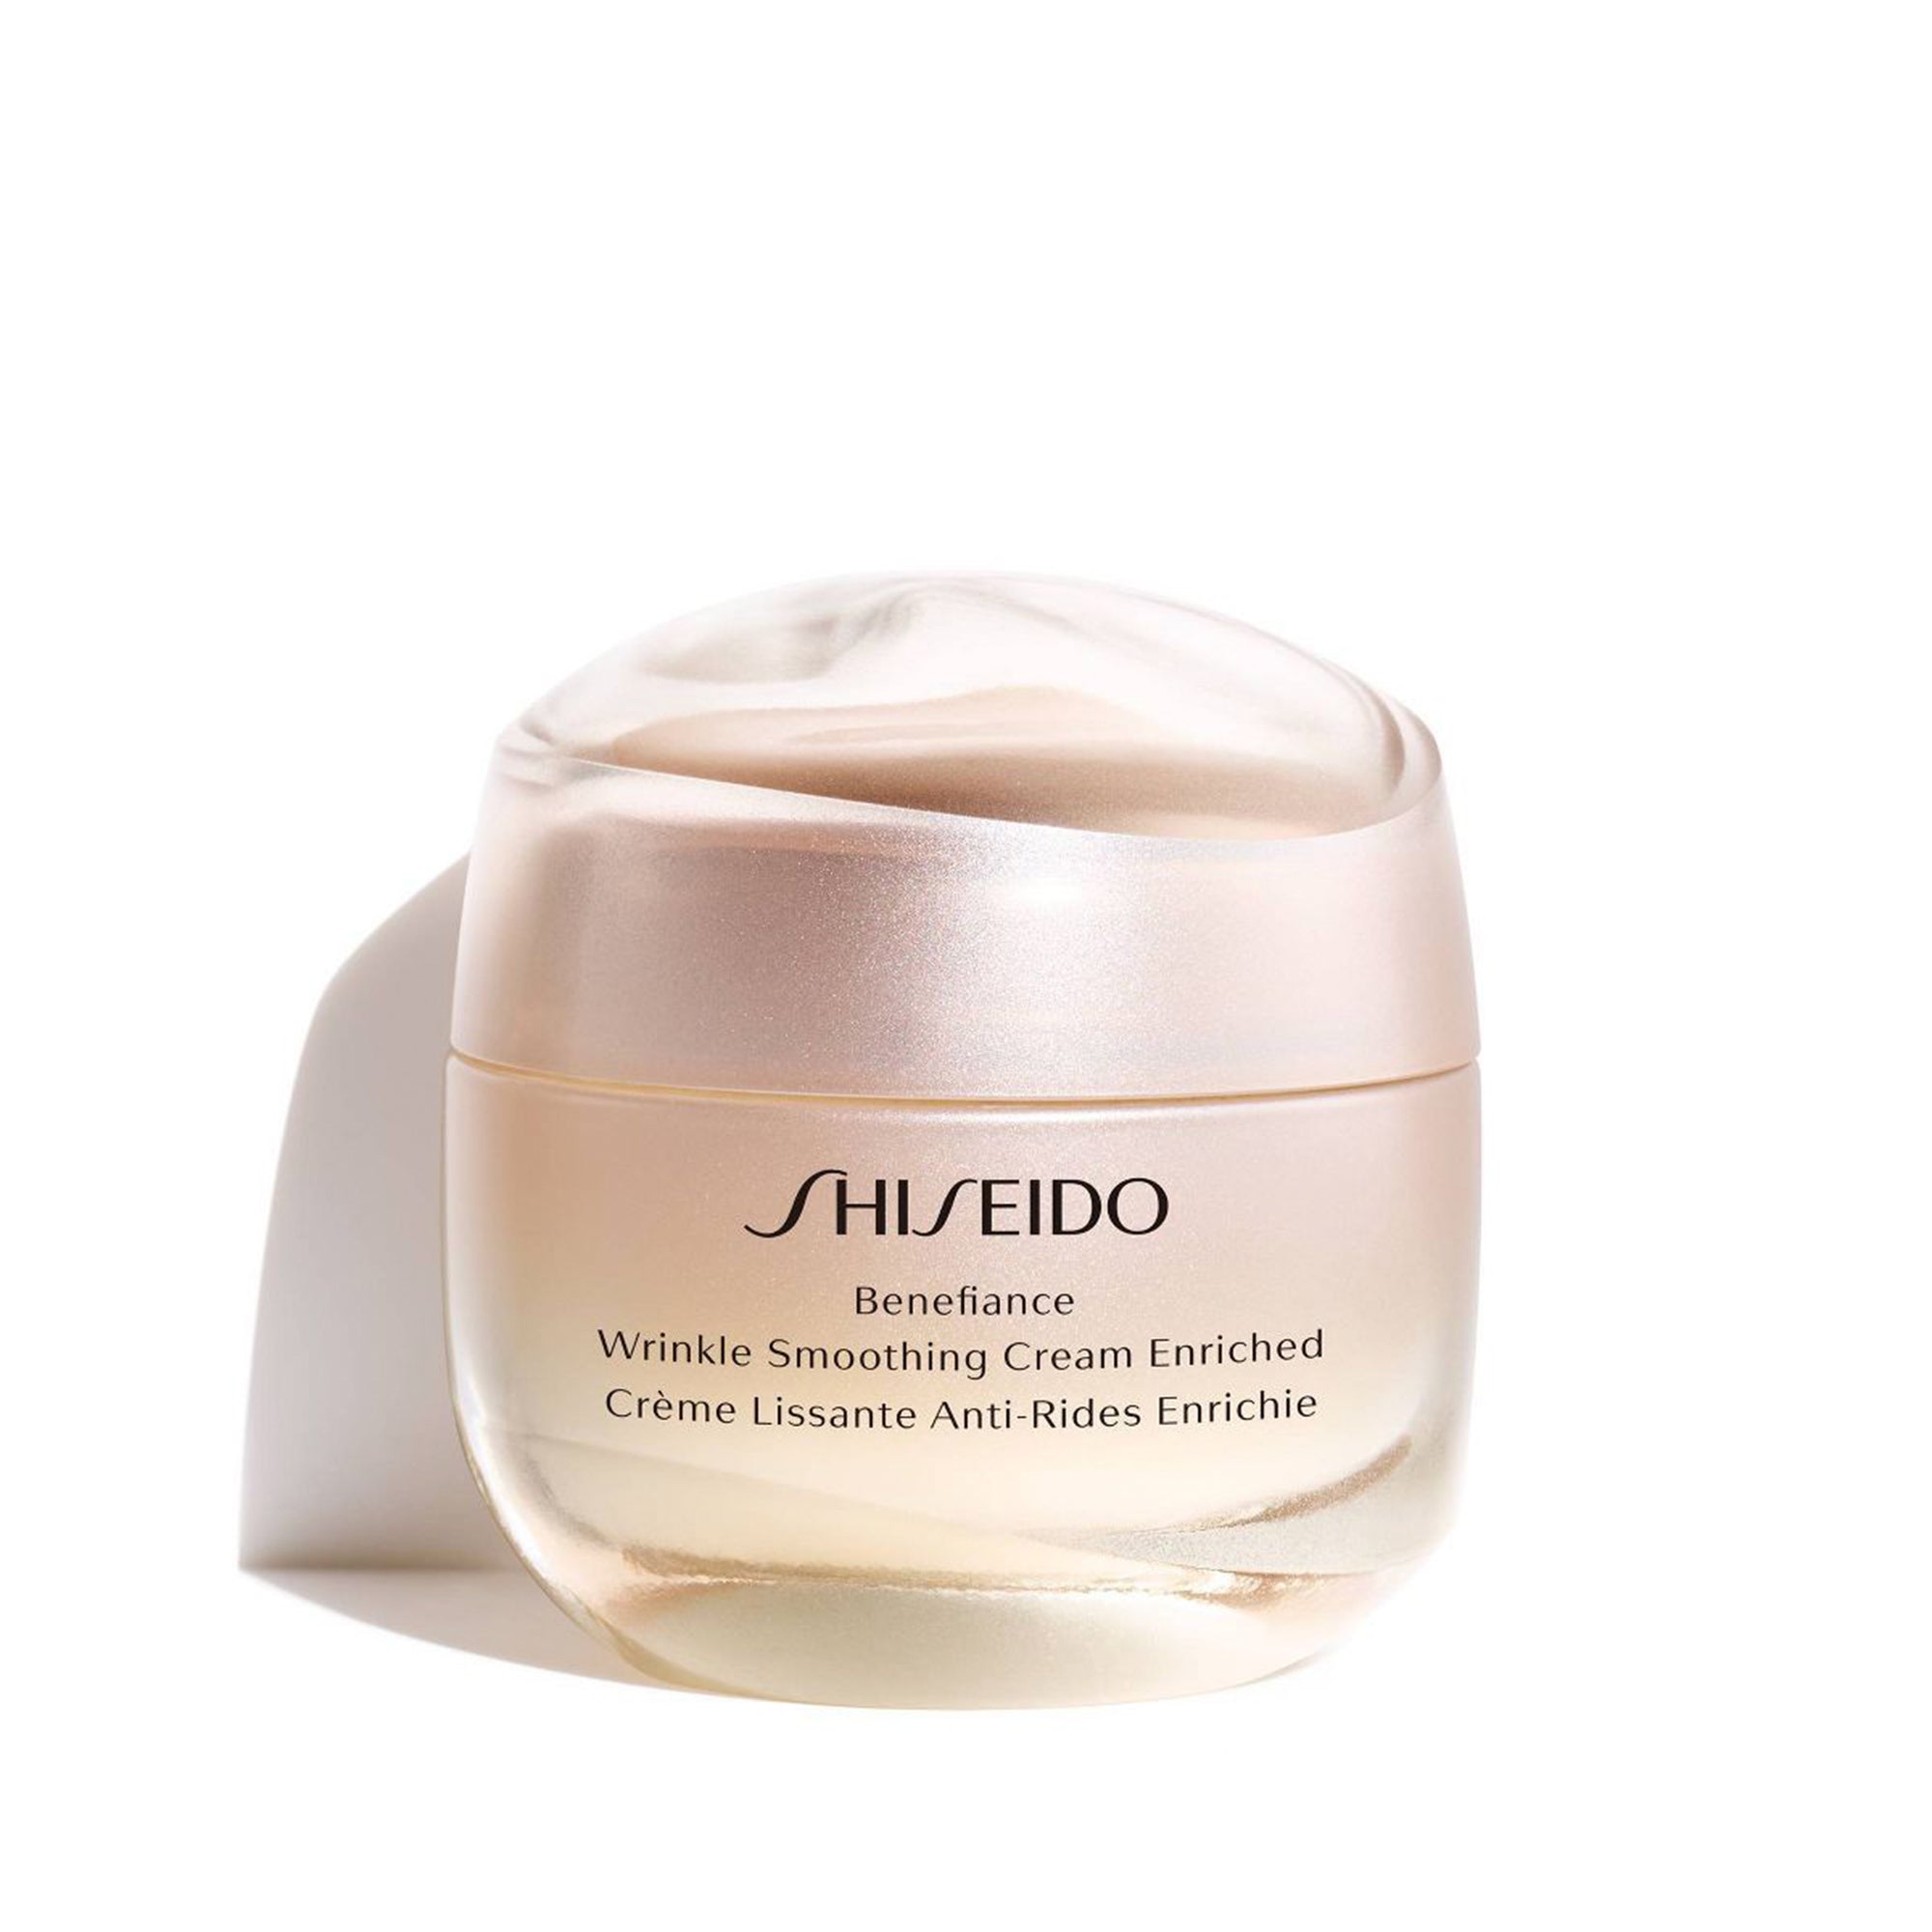 Shiseido Benefiance Wrinkle Smoothing Cream Enriched, 1.69oz